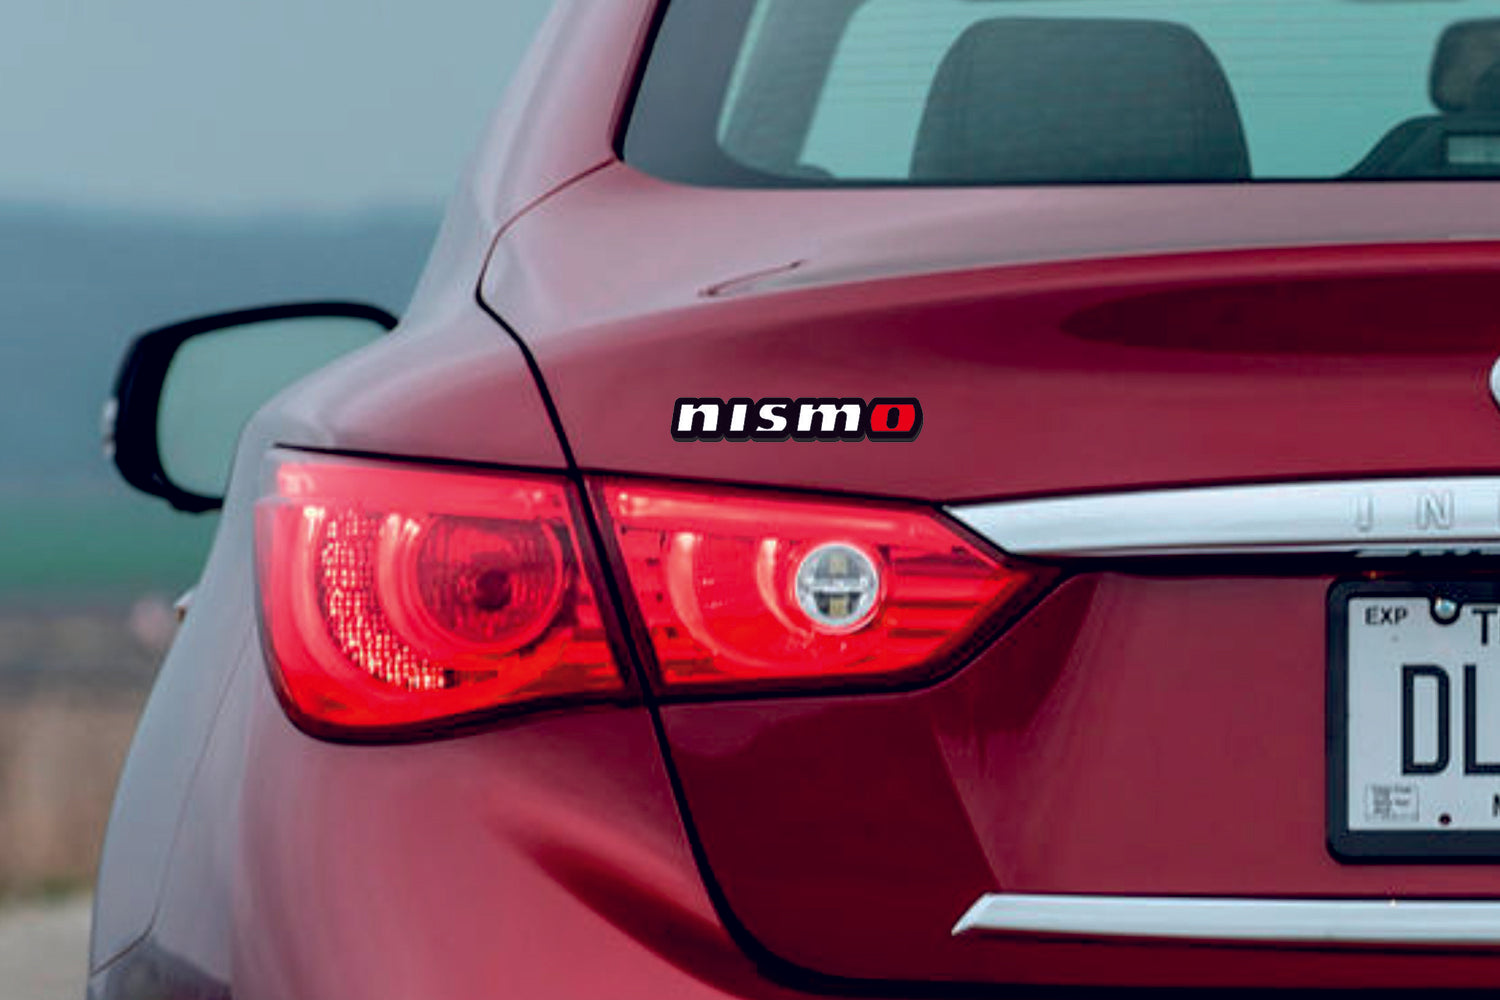 Infiniti tailgate trunk rear emblem with Nismo logo